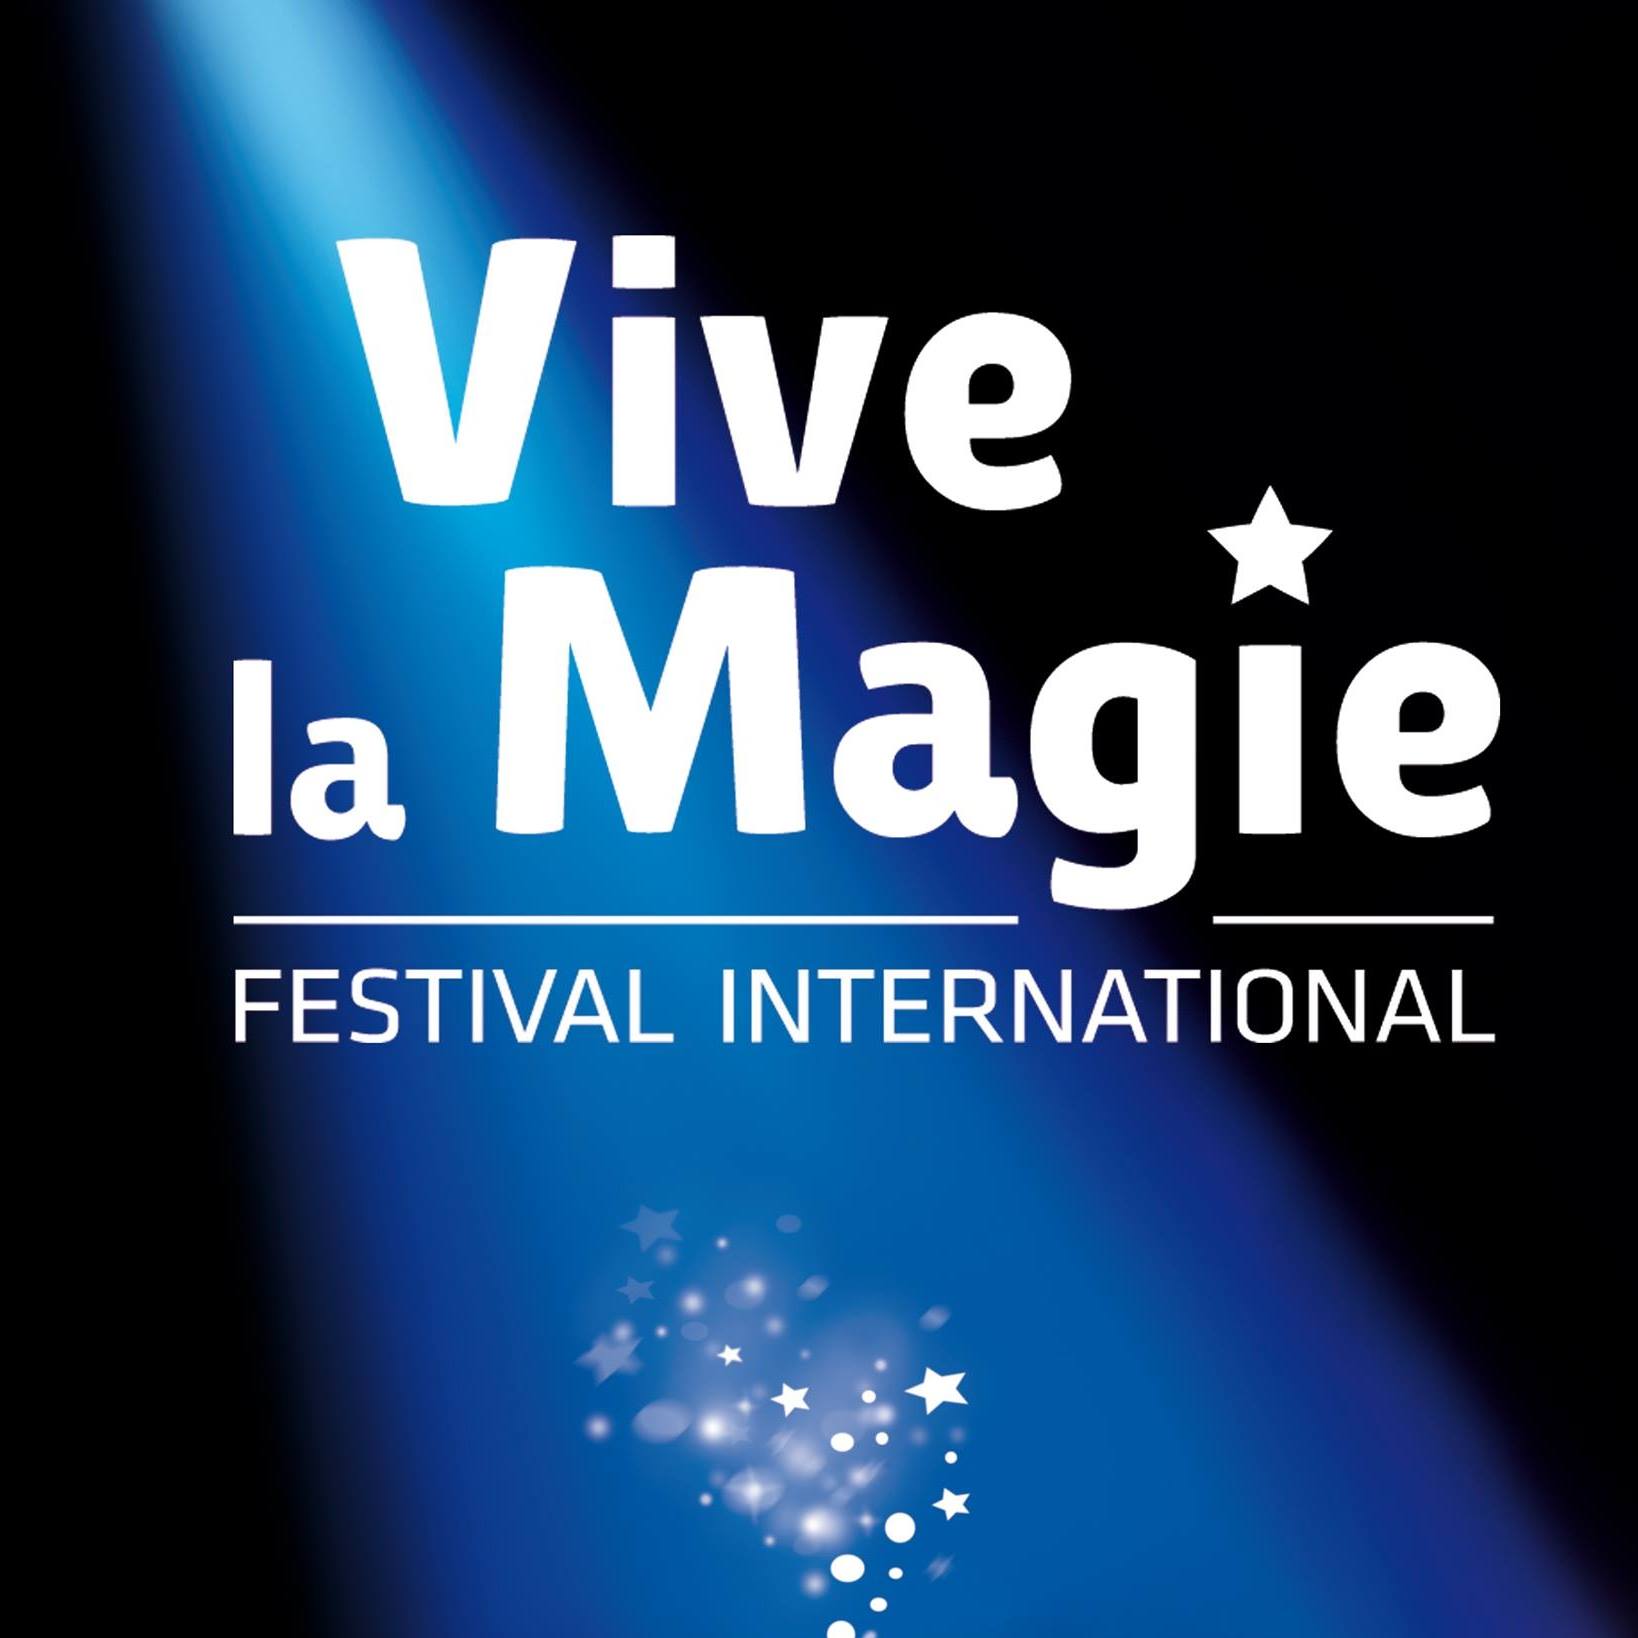 Festival International Vive La Magie 16eme Edition at Atlantia Tickets